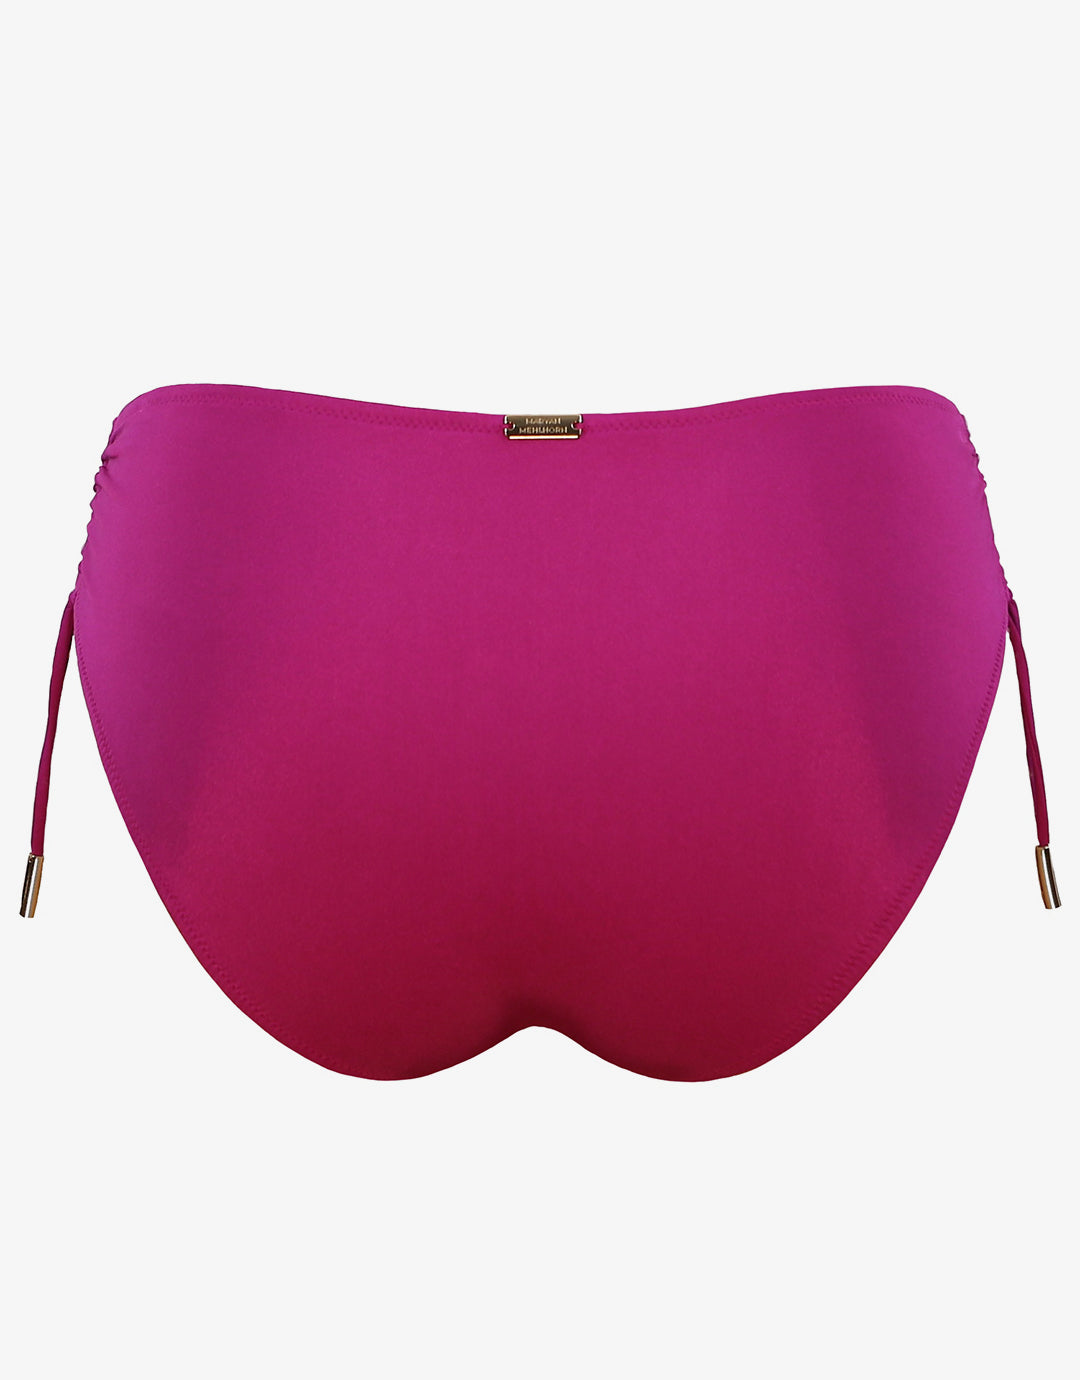 Impact Adjustable Bikini Pant - Berry Glaze - Simply Beach UK